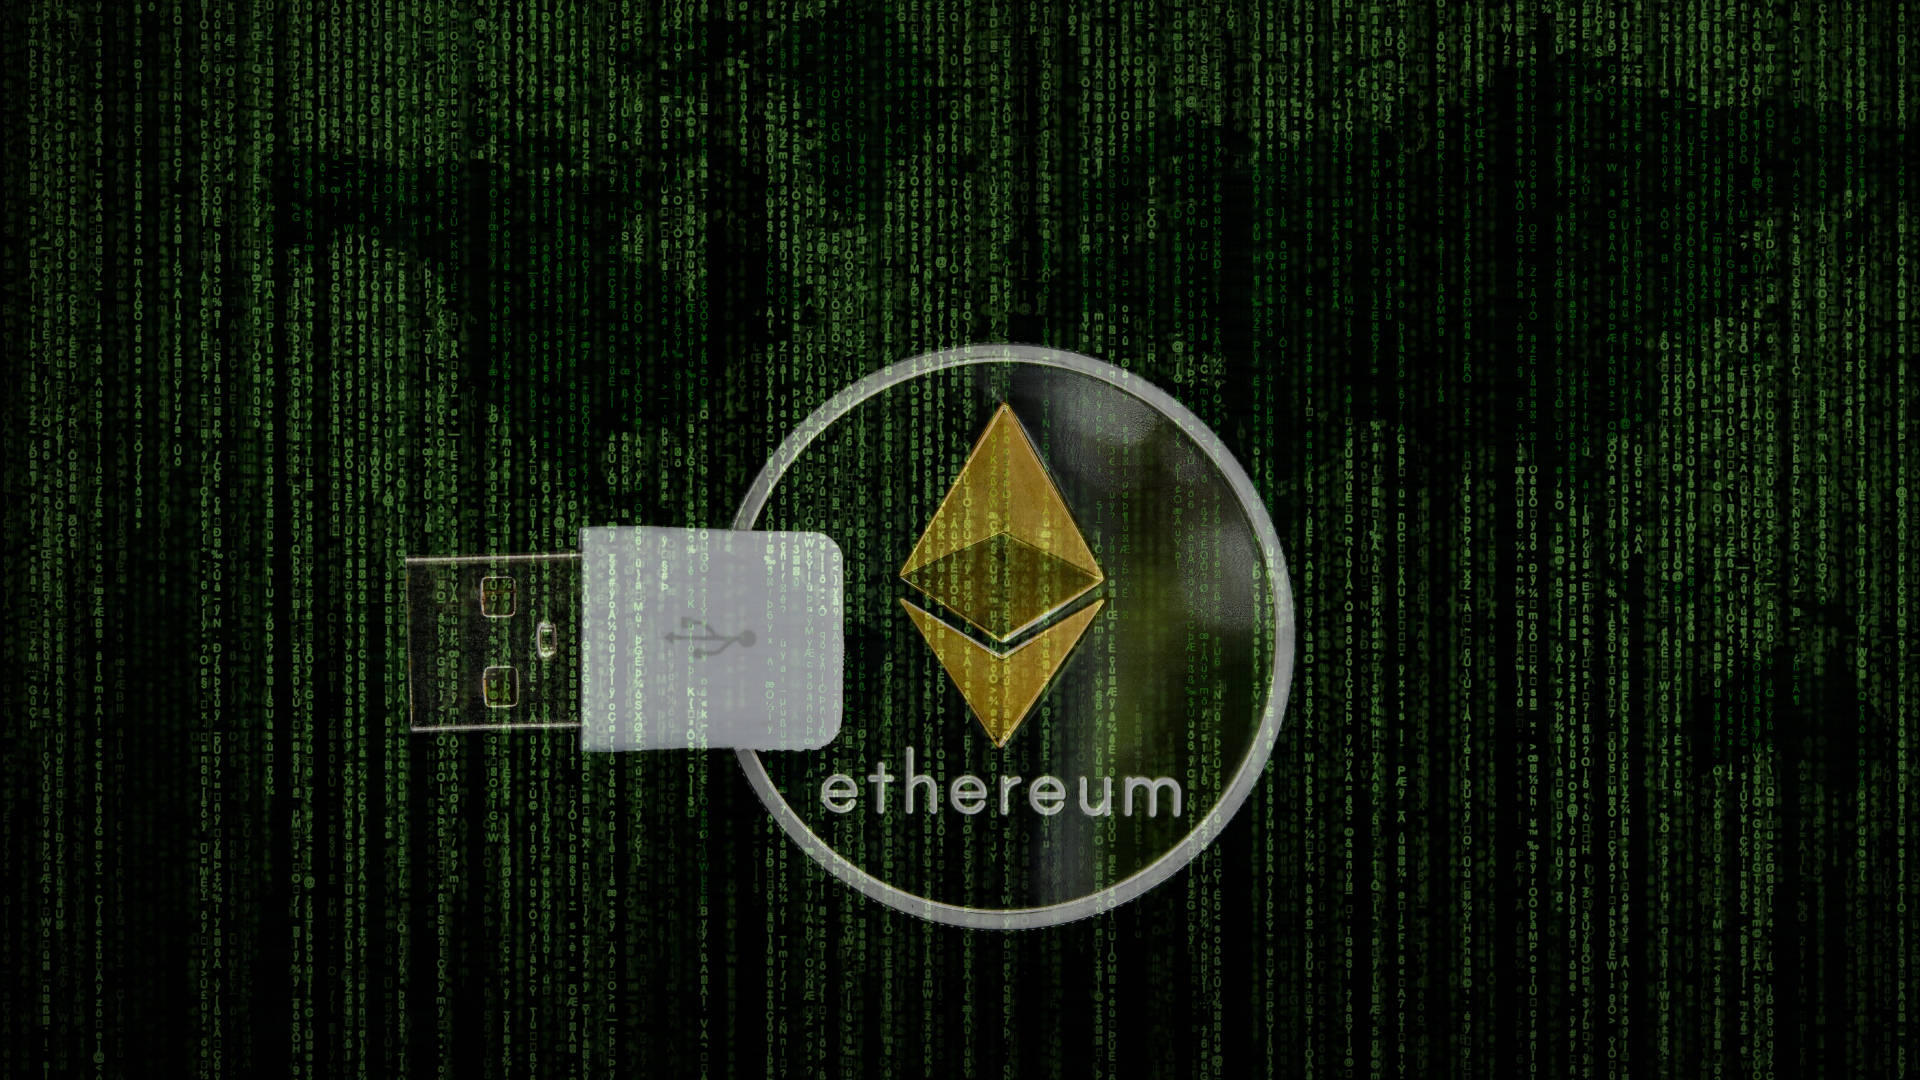 Ethereum Matrix Inspired Poster